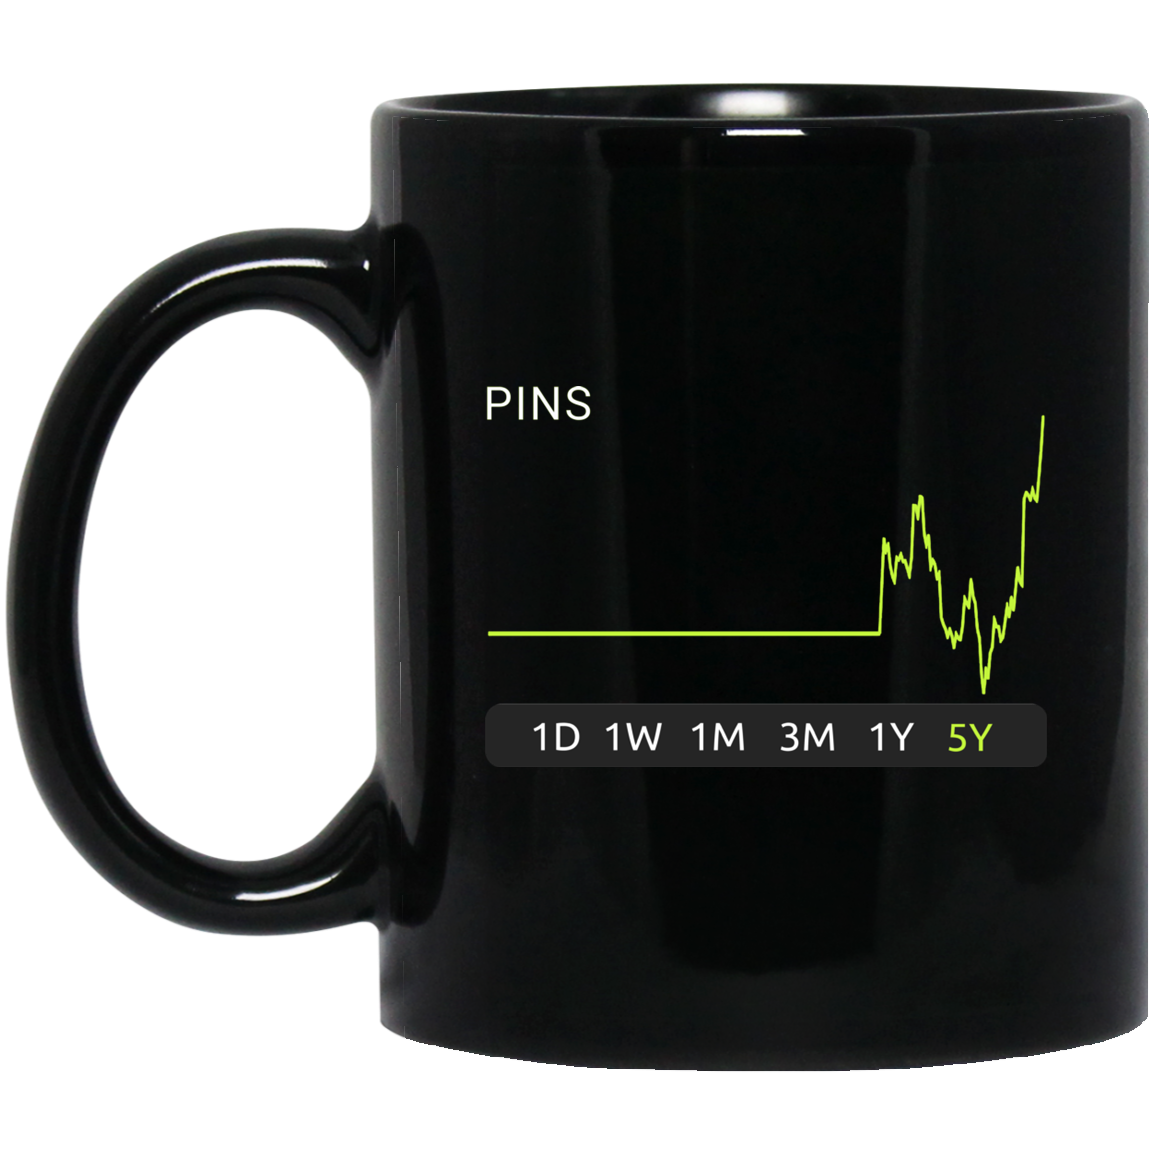 PINS Stock 5y Mug